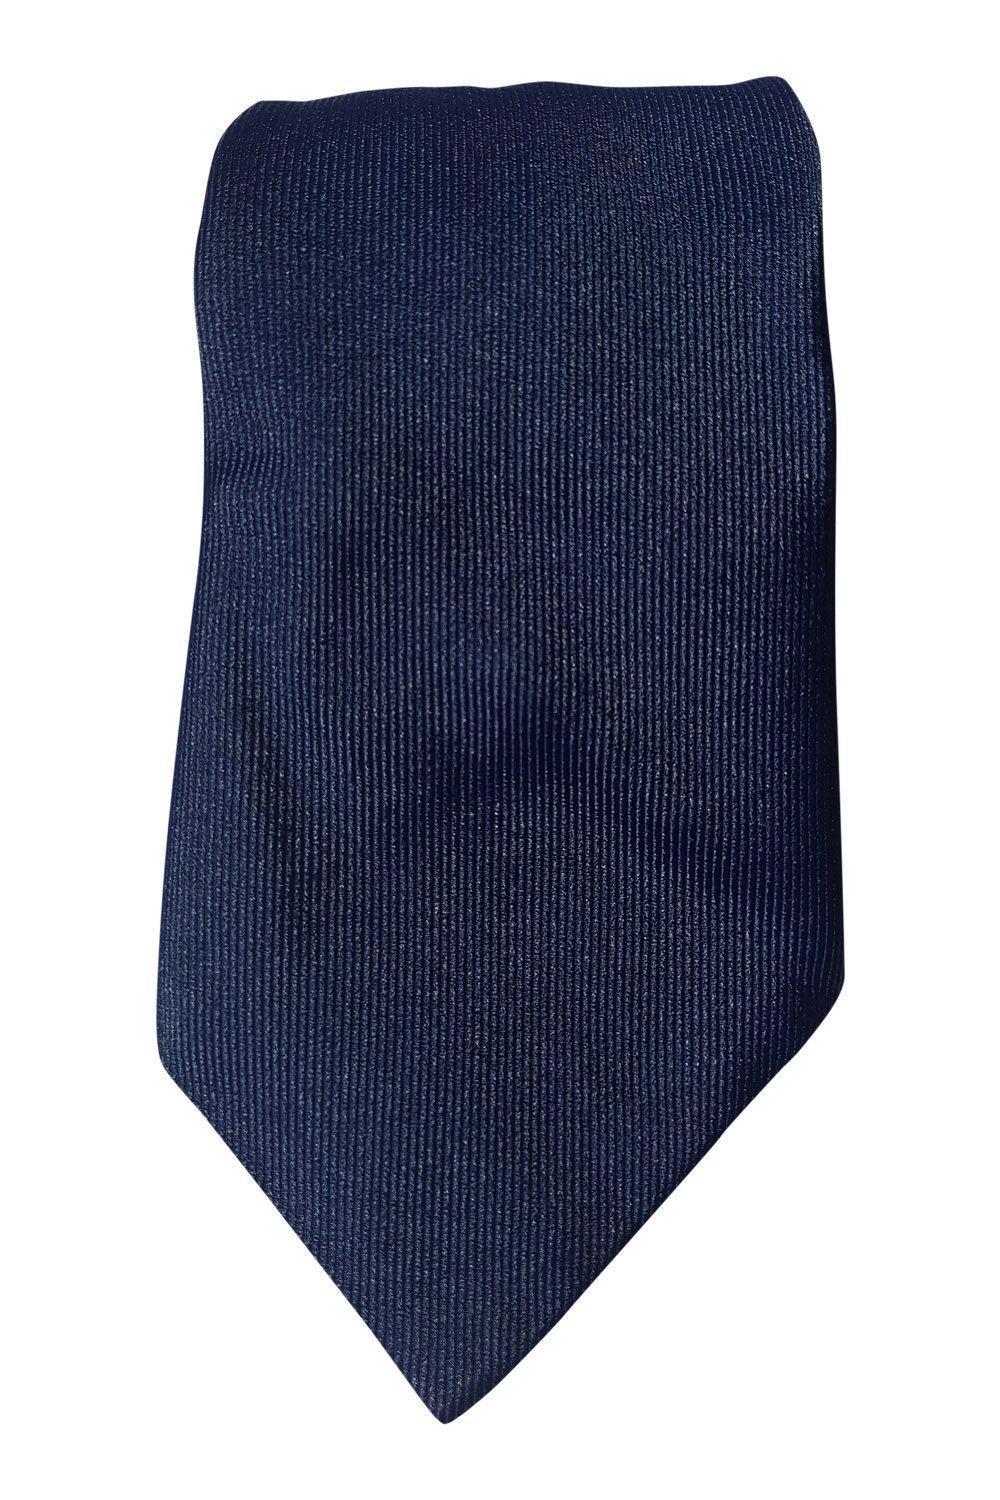 MACASETA Solid Navy Blue Neck Tie (54")-Macaseta-The Freperie